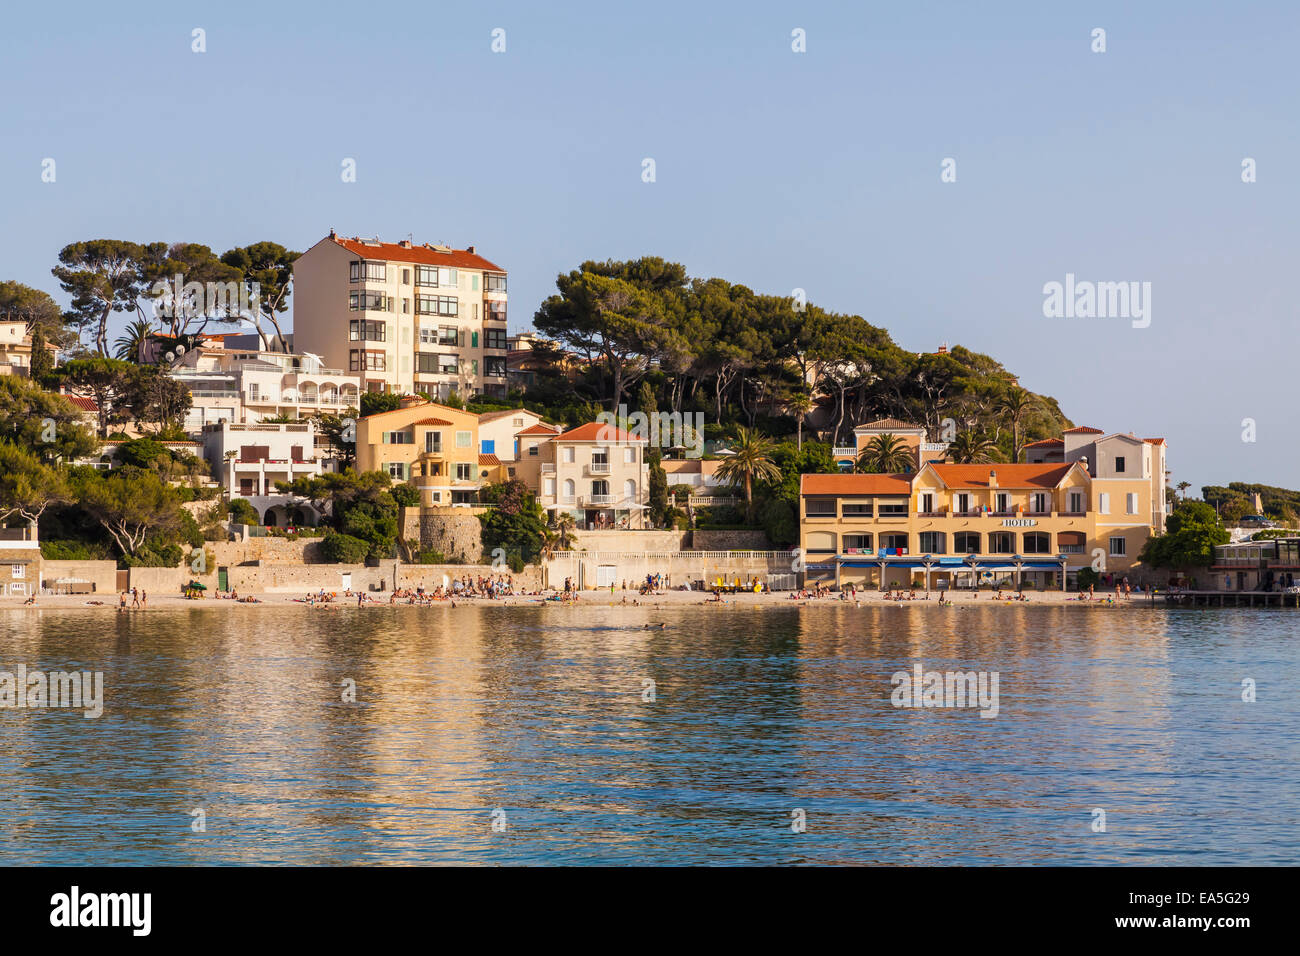 France, Provence-Alpes-Cote d'Azur, Department Var, Bandol, Hotel at the beach Stock Photo